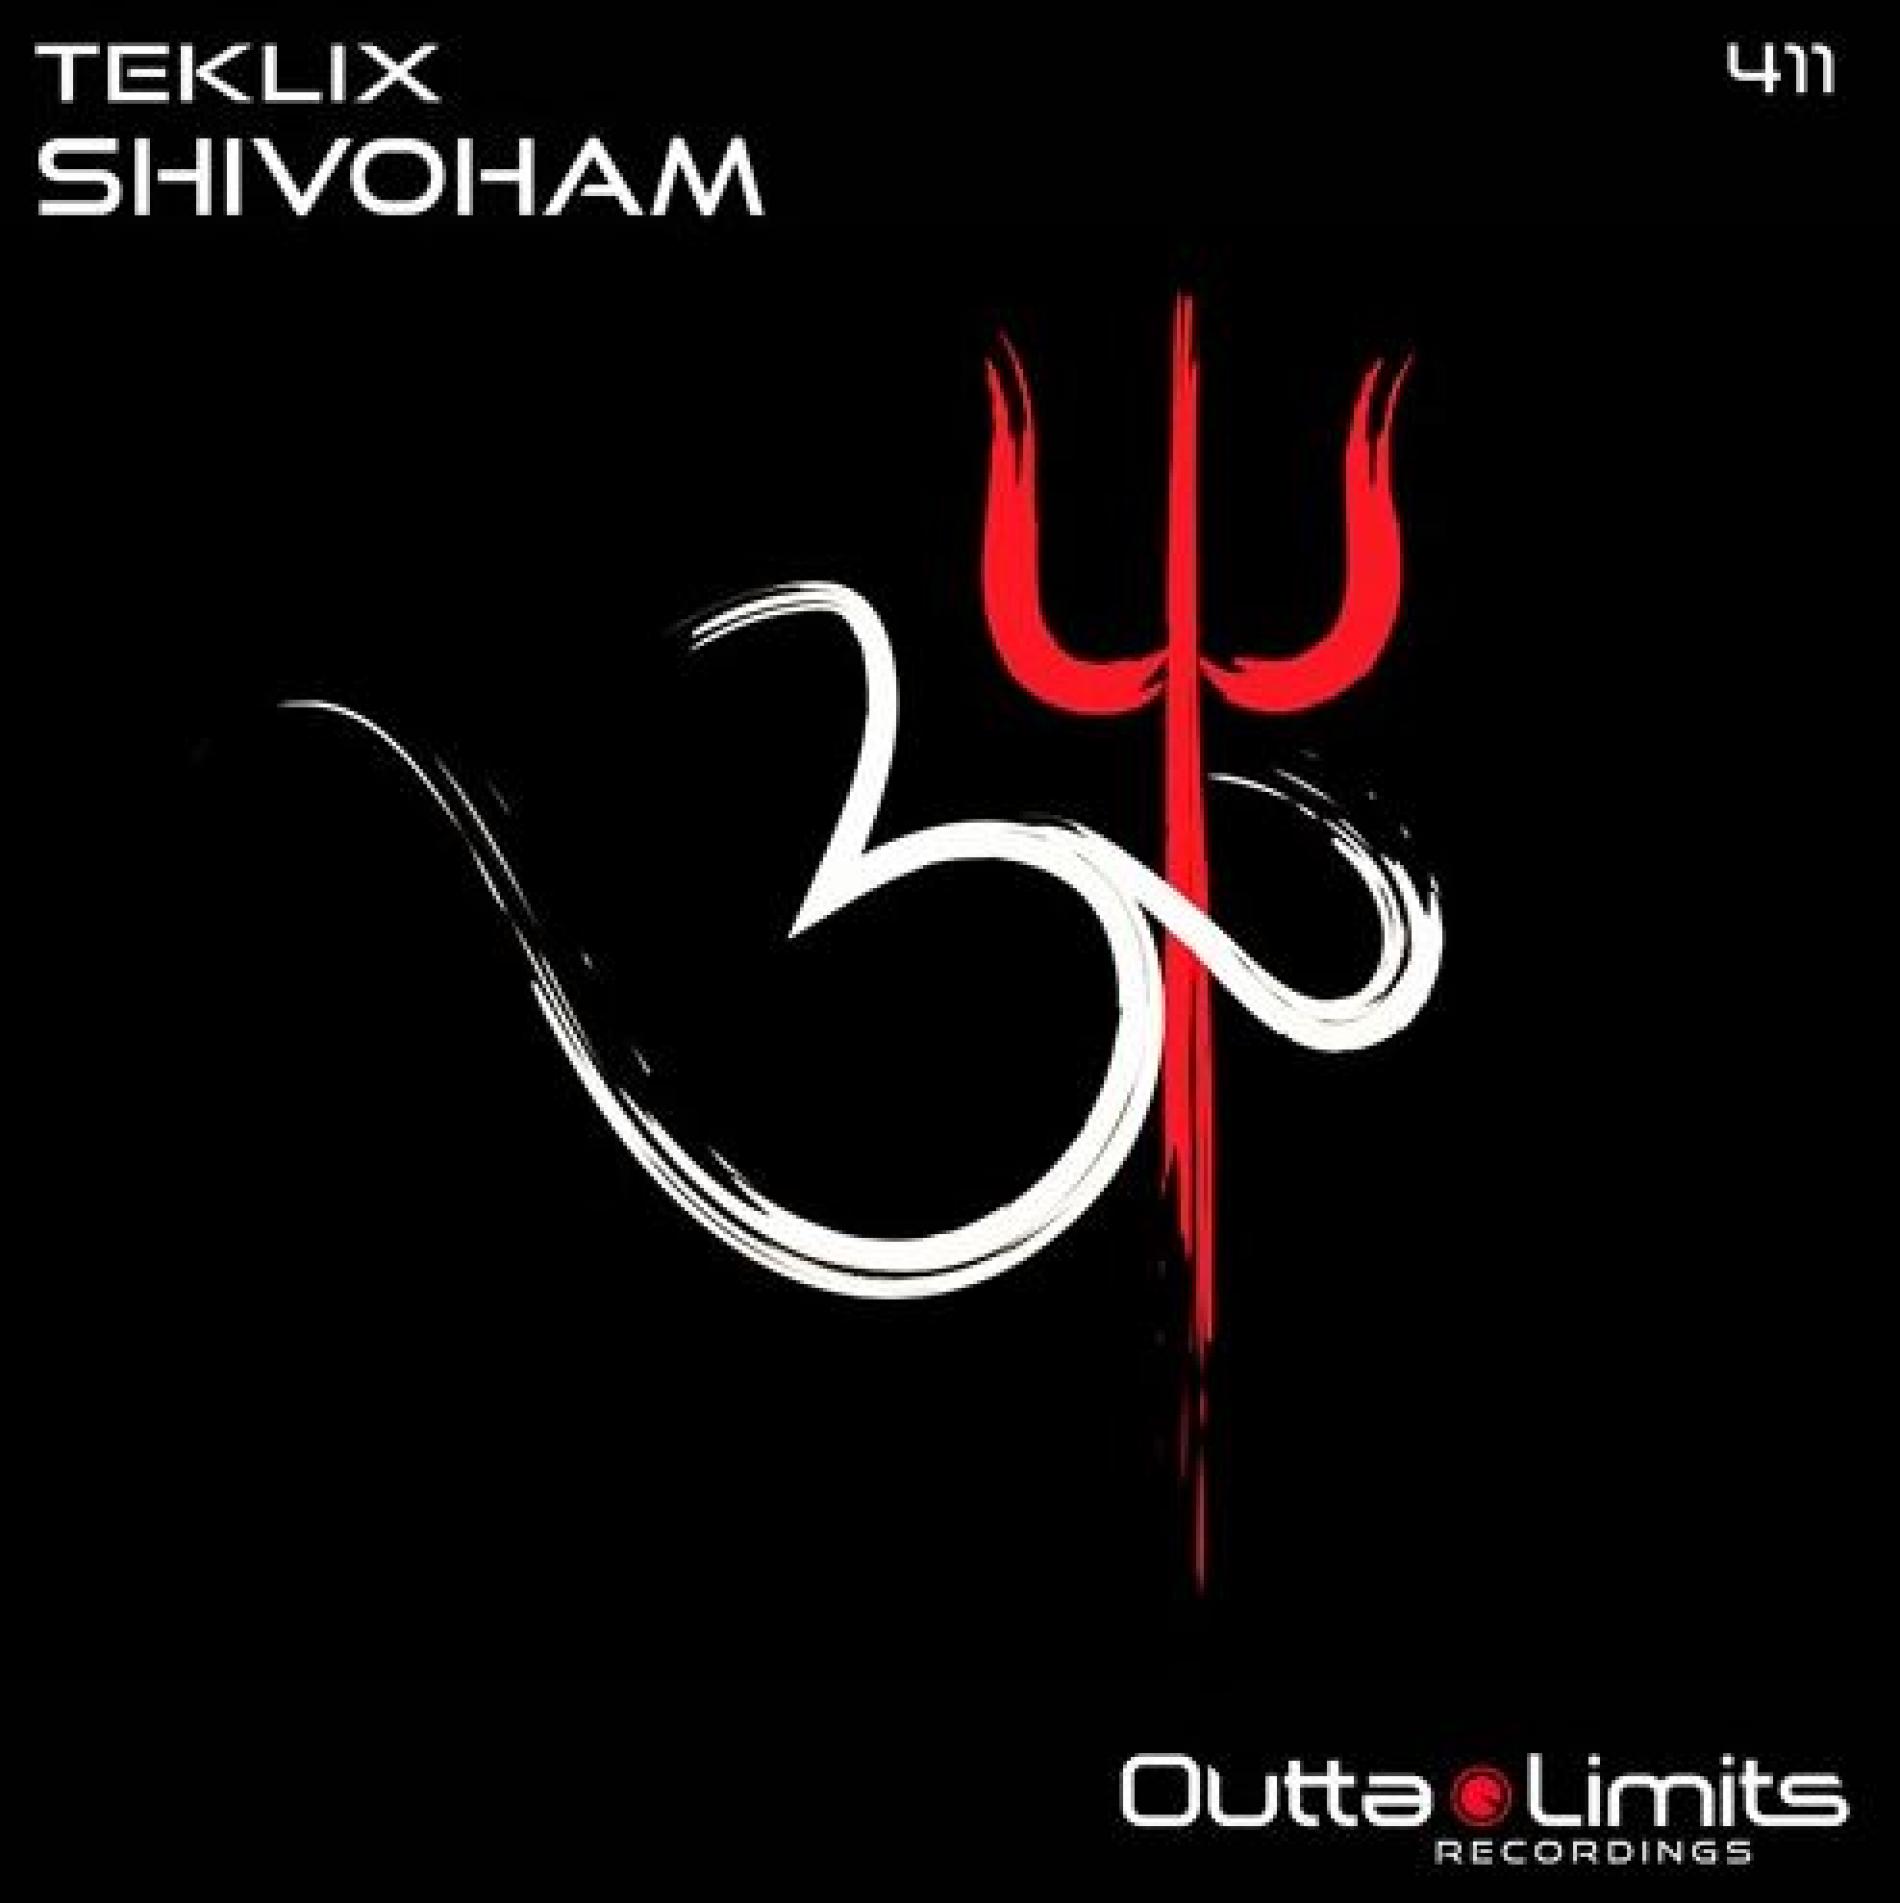 New Music : Teklix – Shivoham (Original Mix) [Outta Limits] Preview